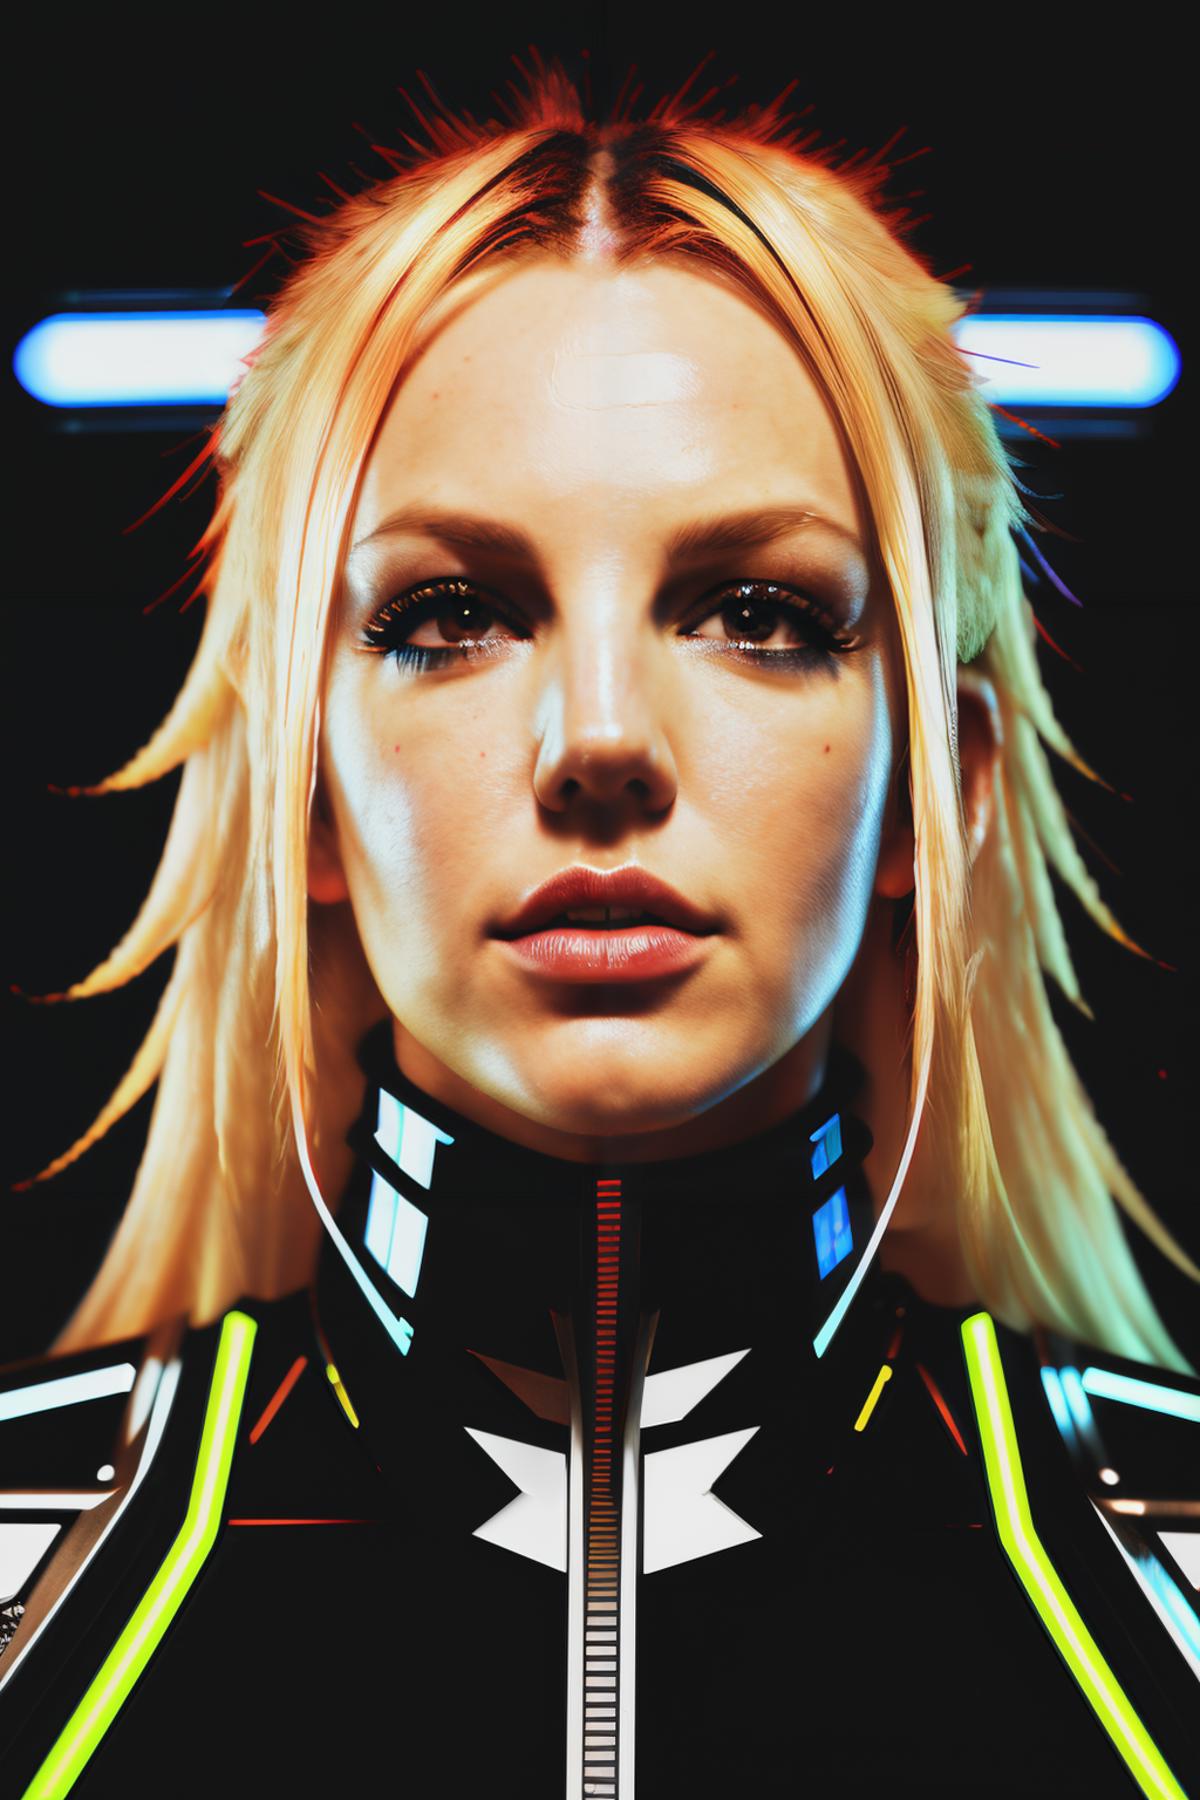 Britney Spears image by frankyfrank2k